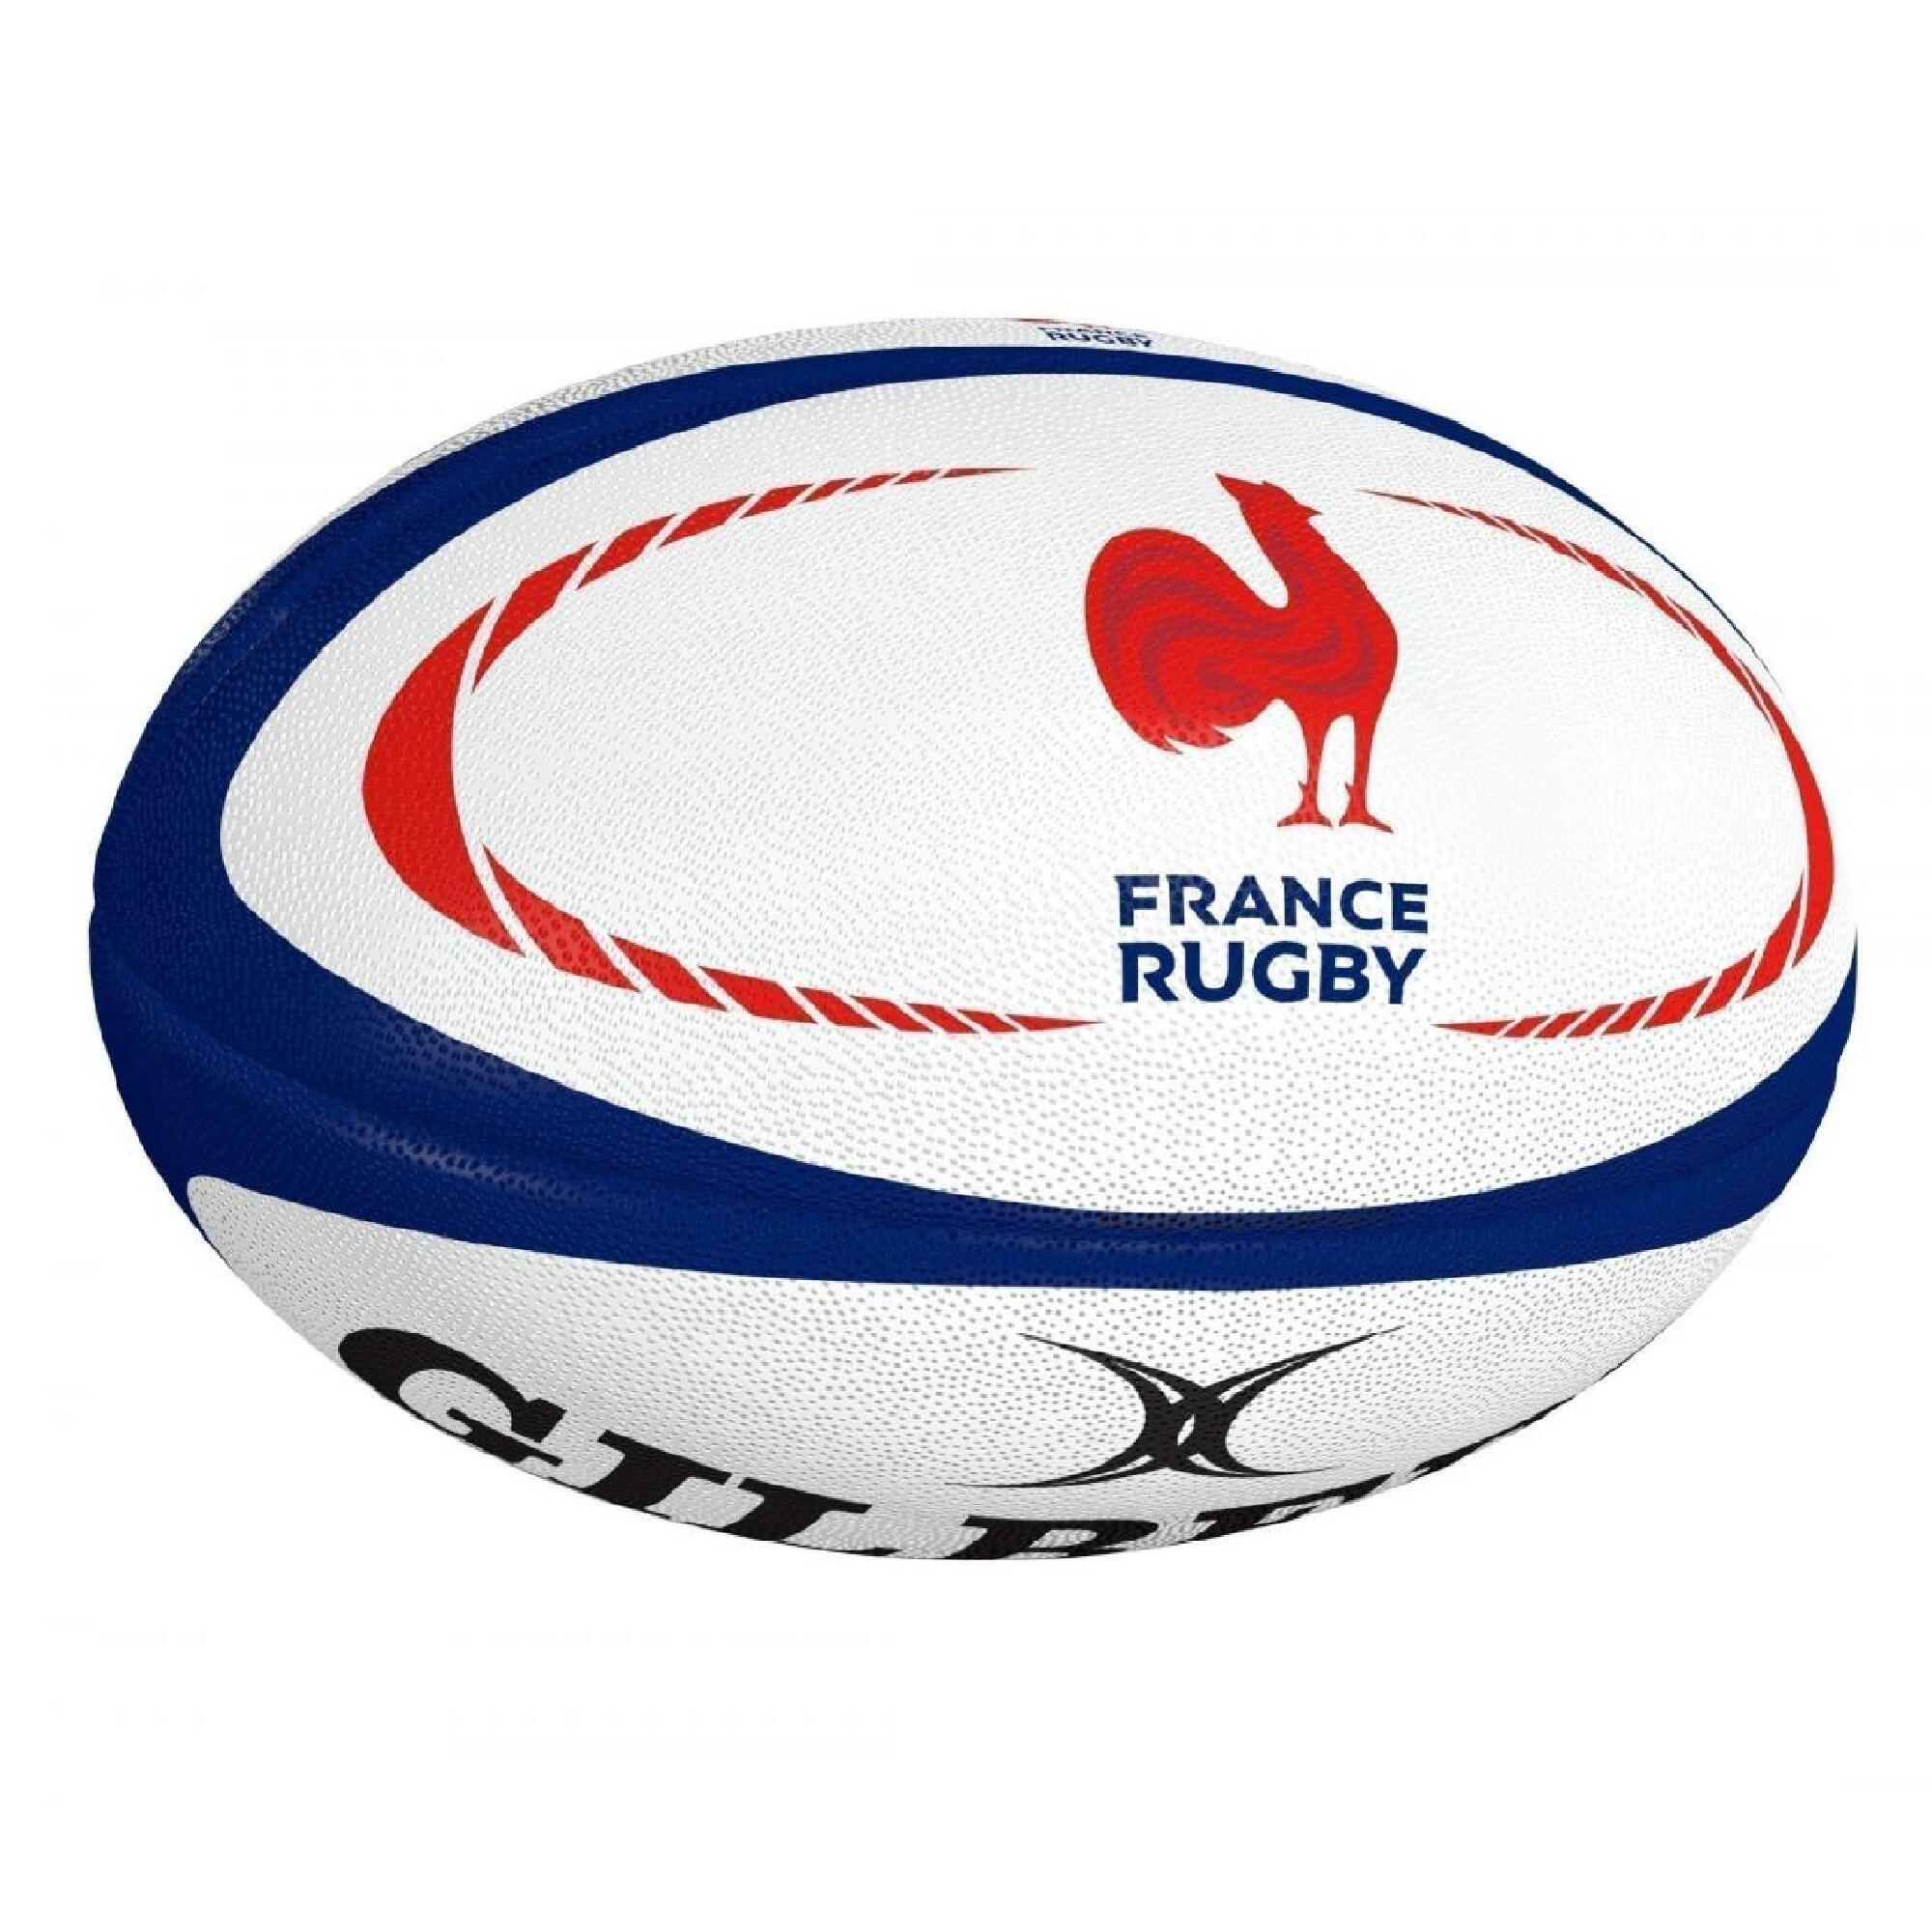 Minge Rugby Gilbert Replica France Mărimea 5 alb-albastru-roșu Accesorii